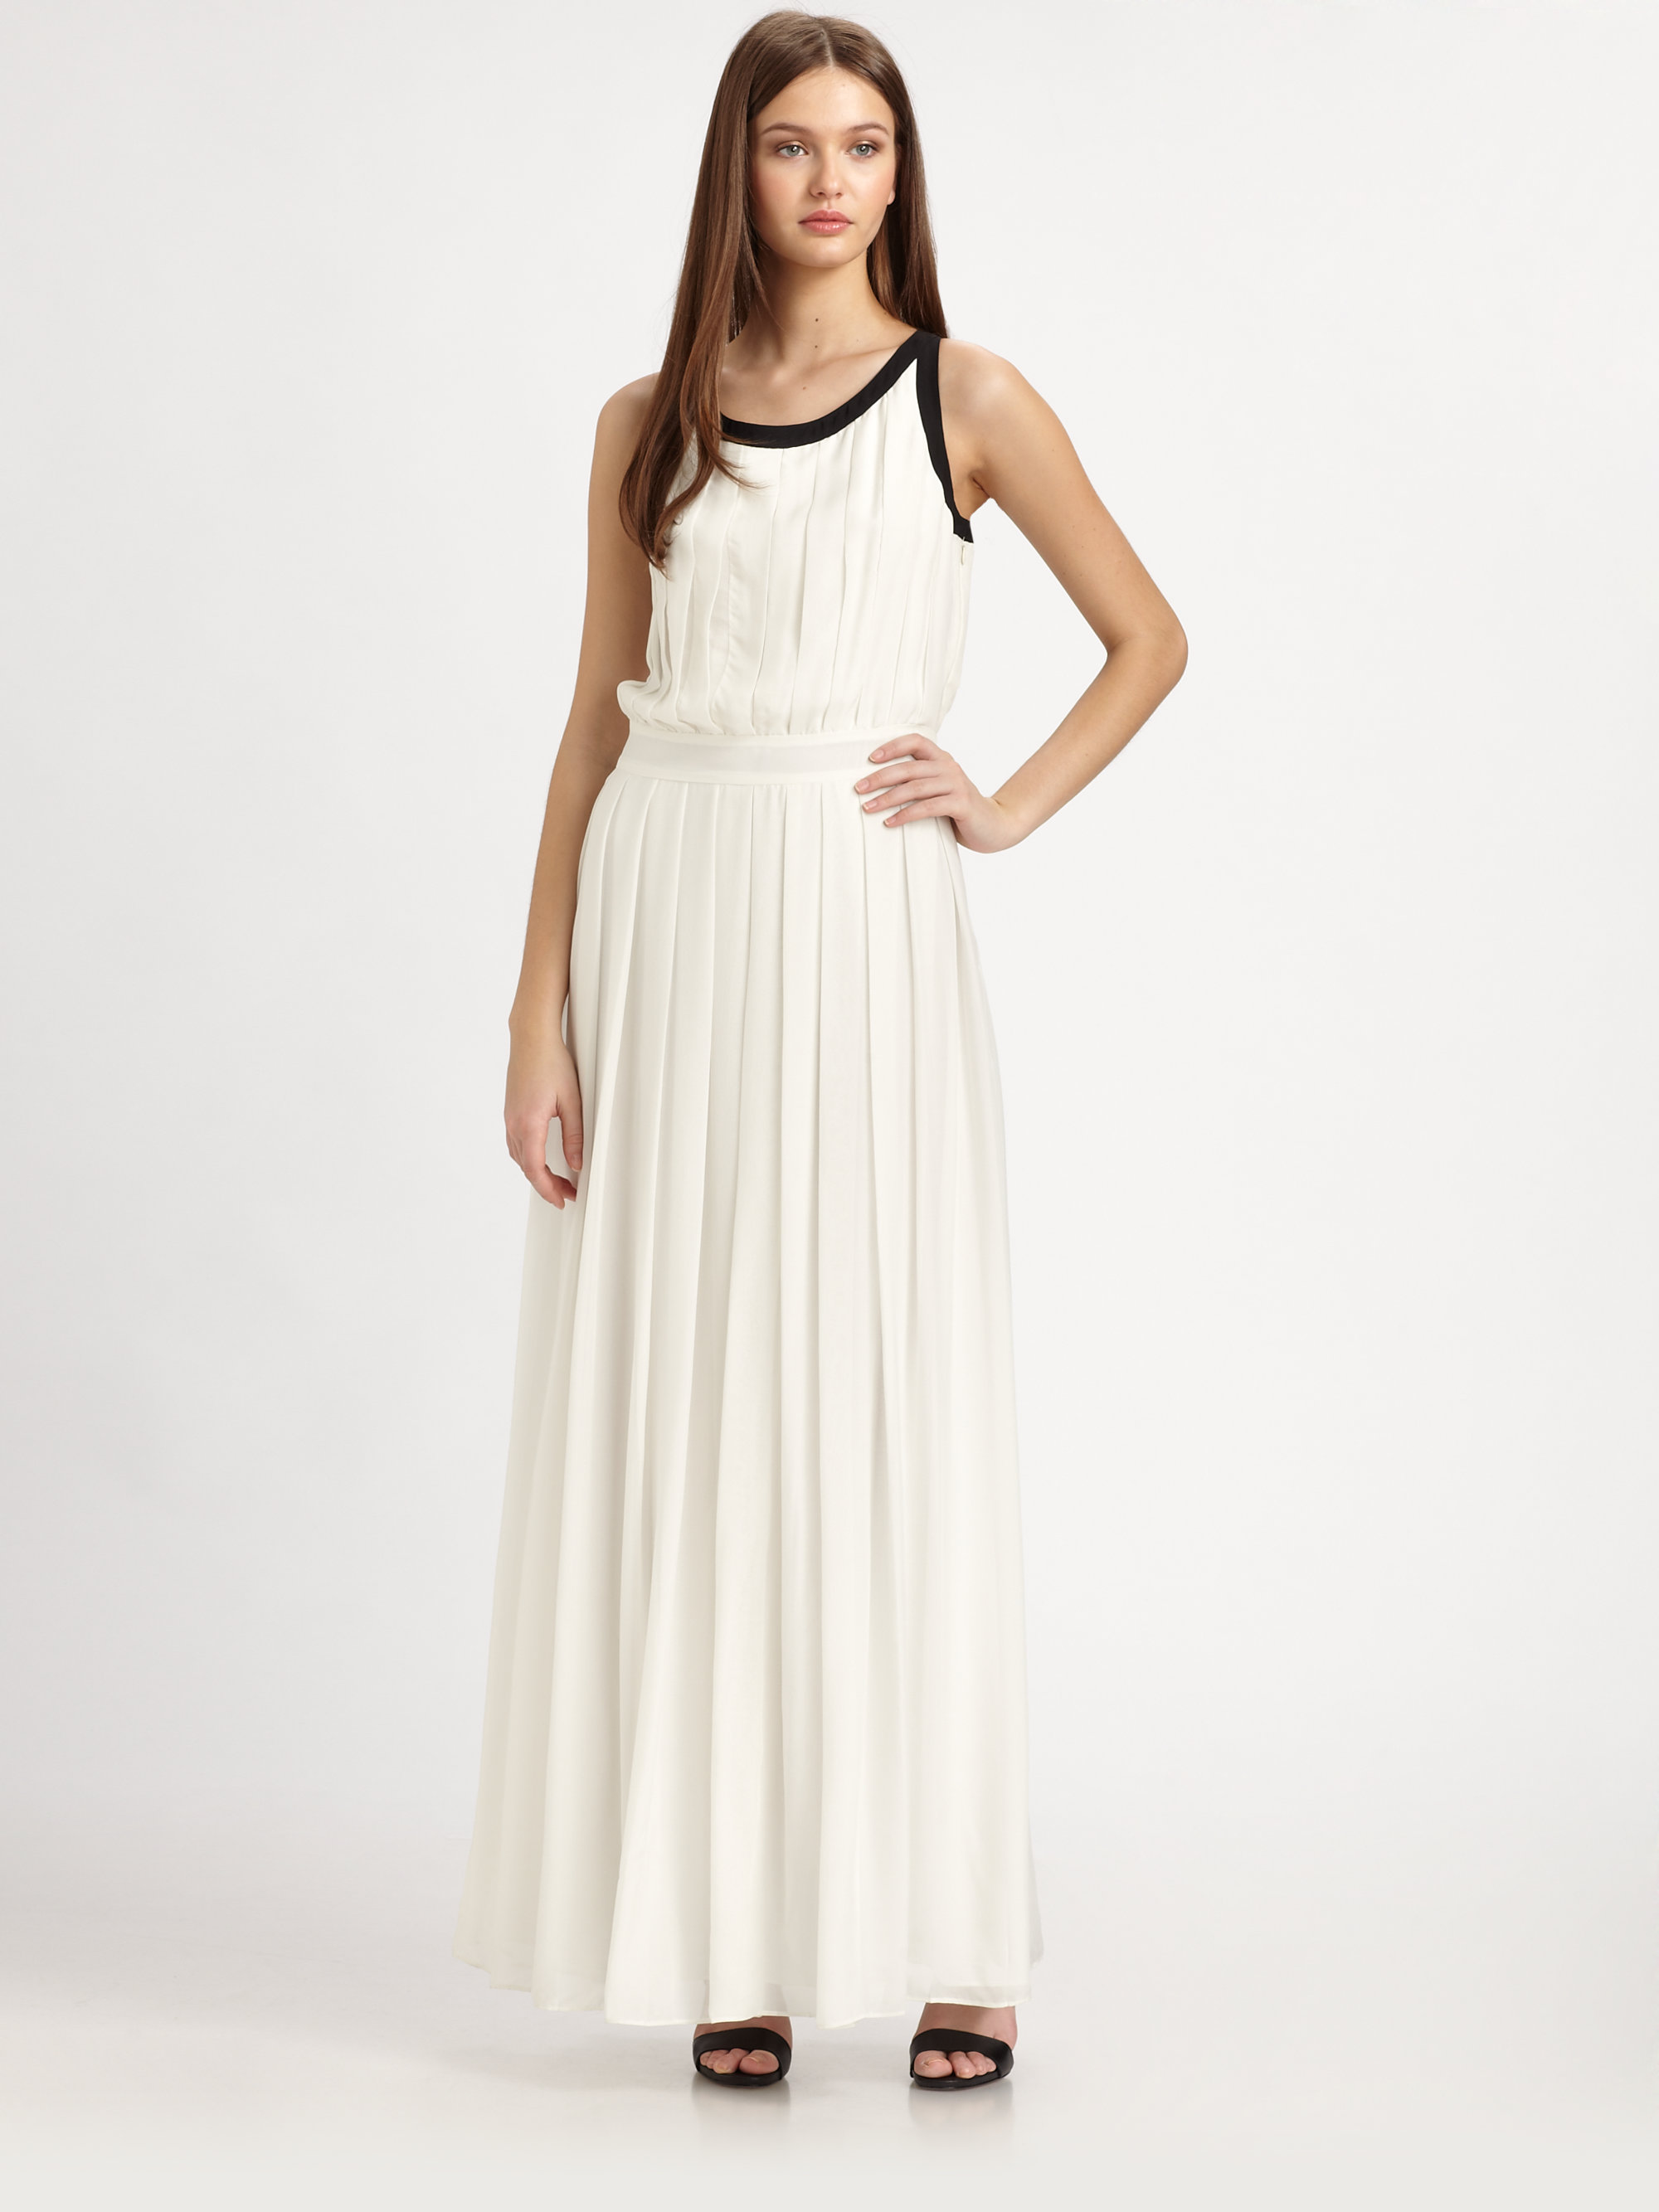 Lyst - Rachel Zoe Silk Chiffon Pleated Maxi Dress in White